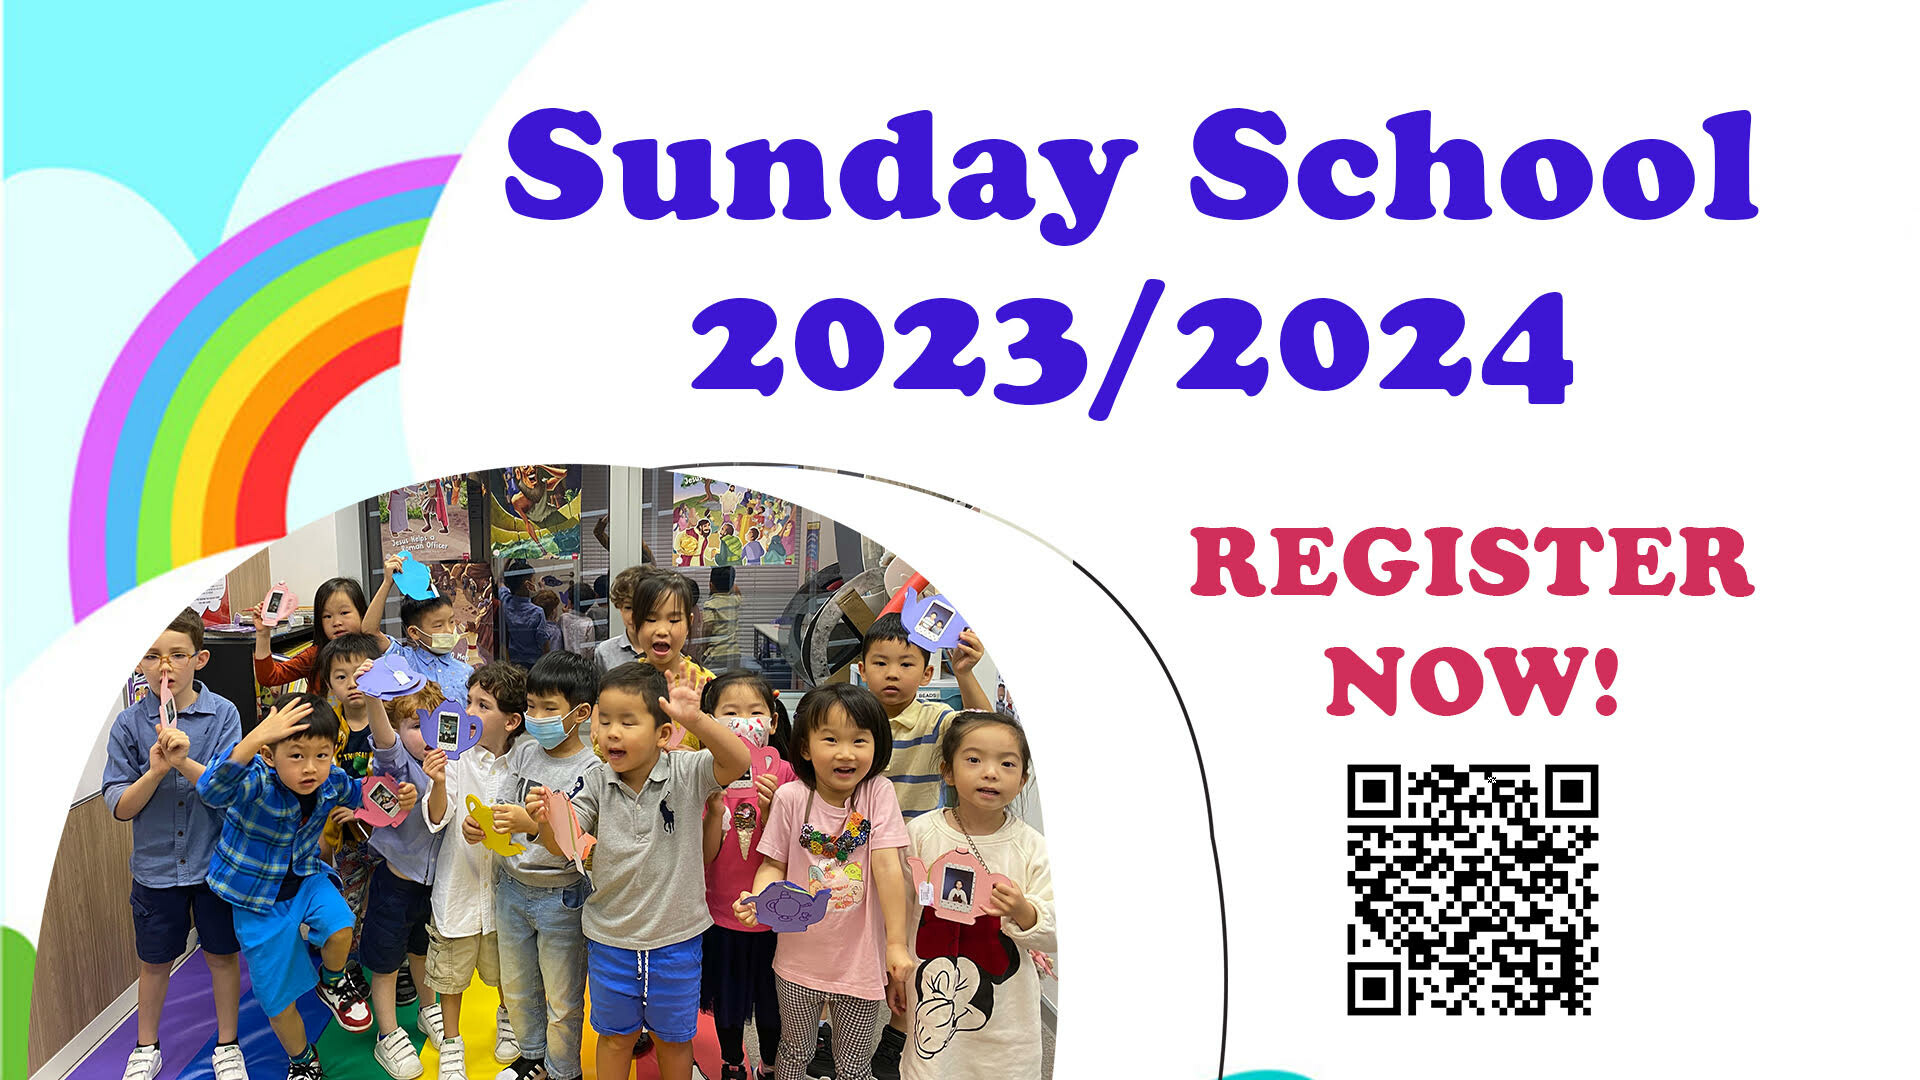 Sunday School registration